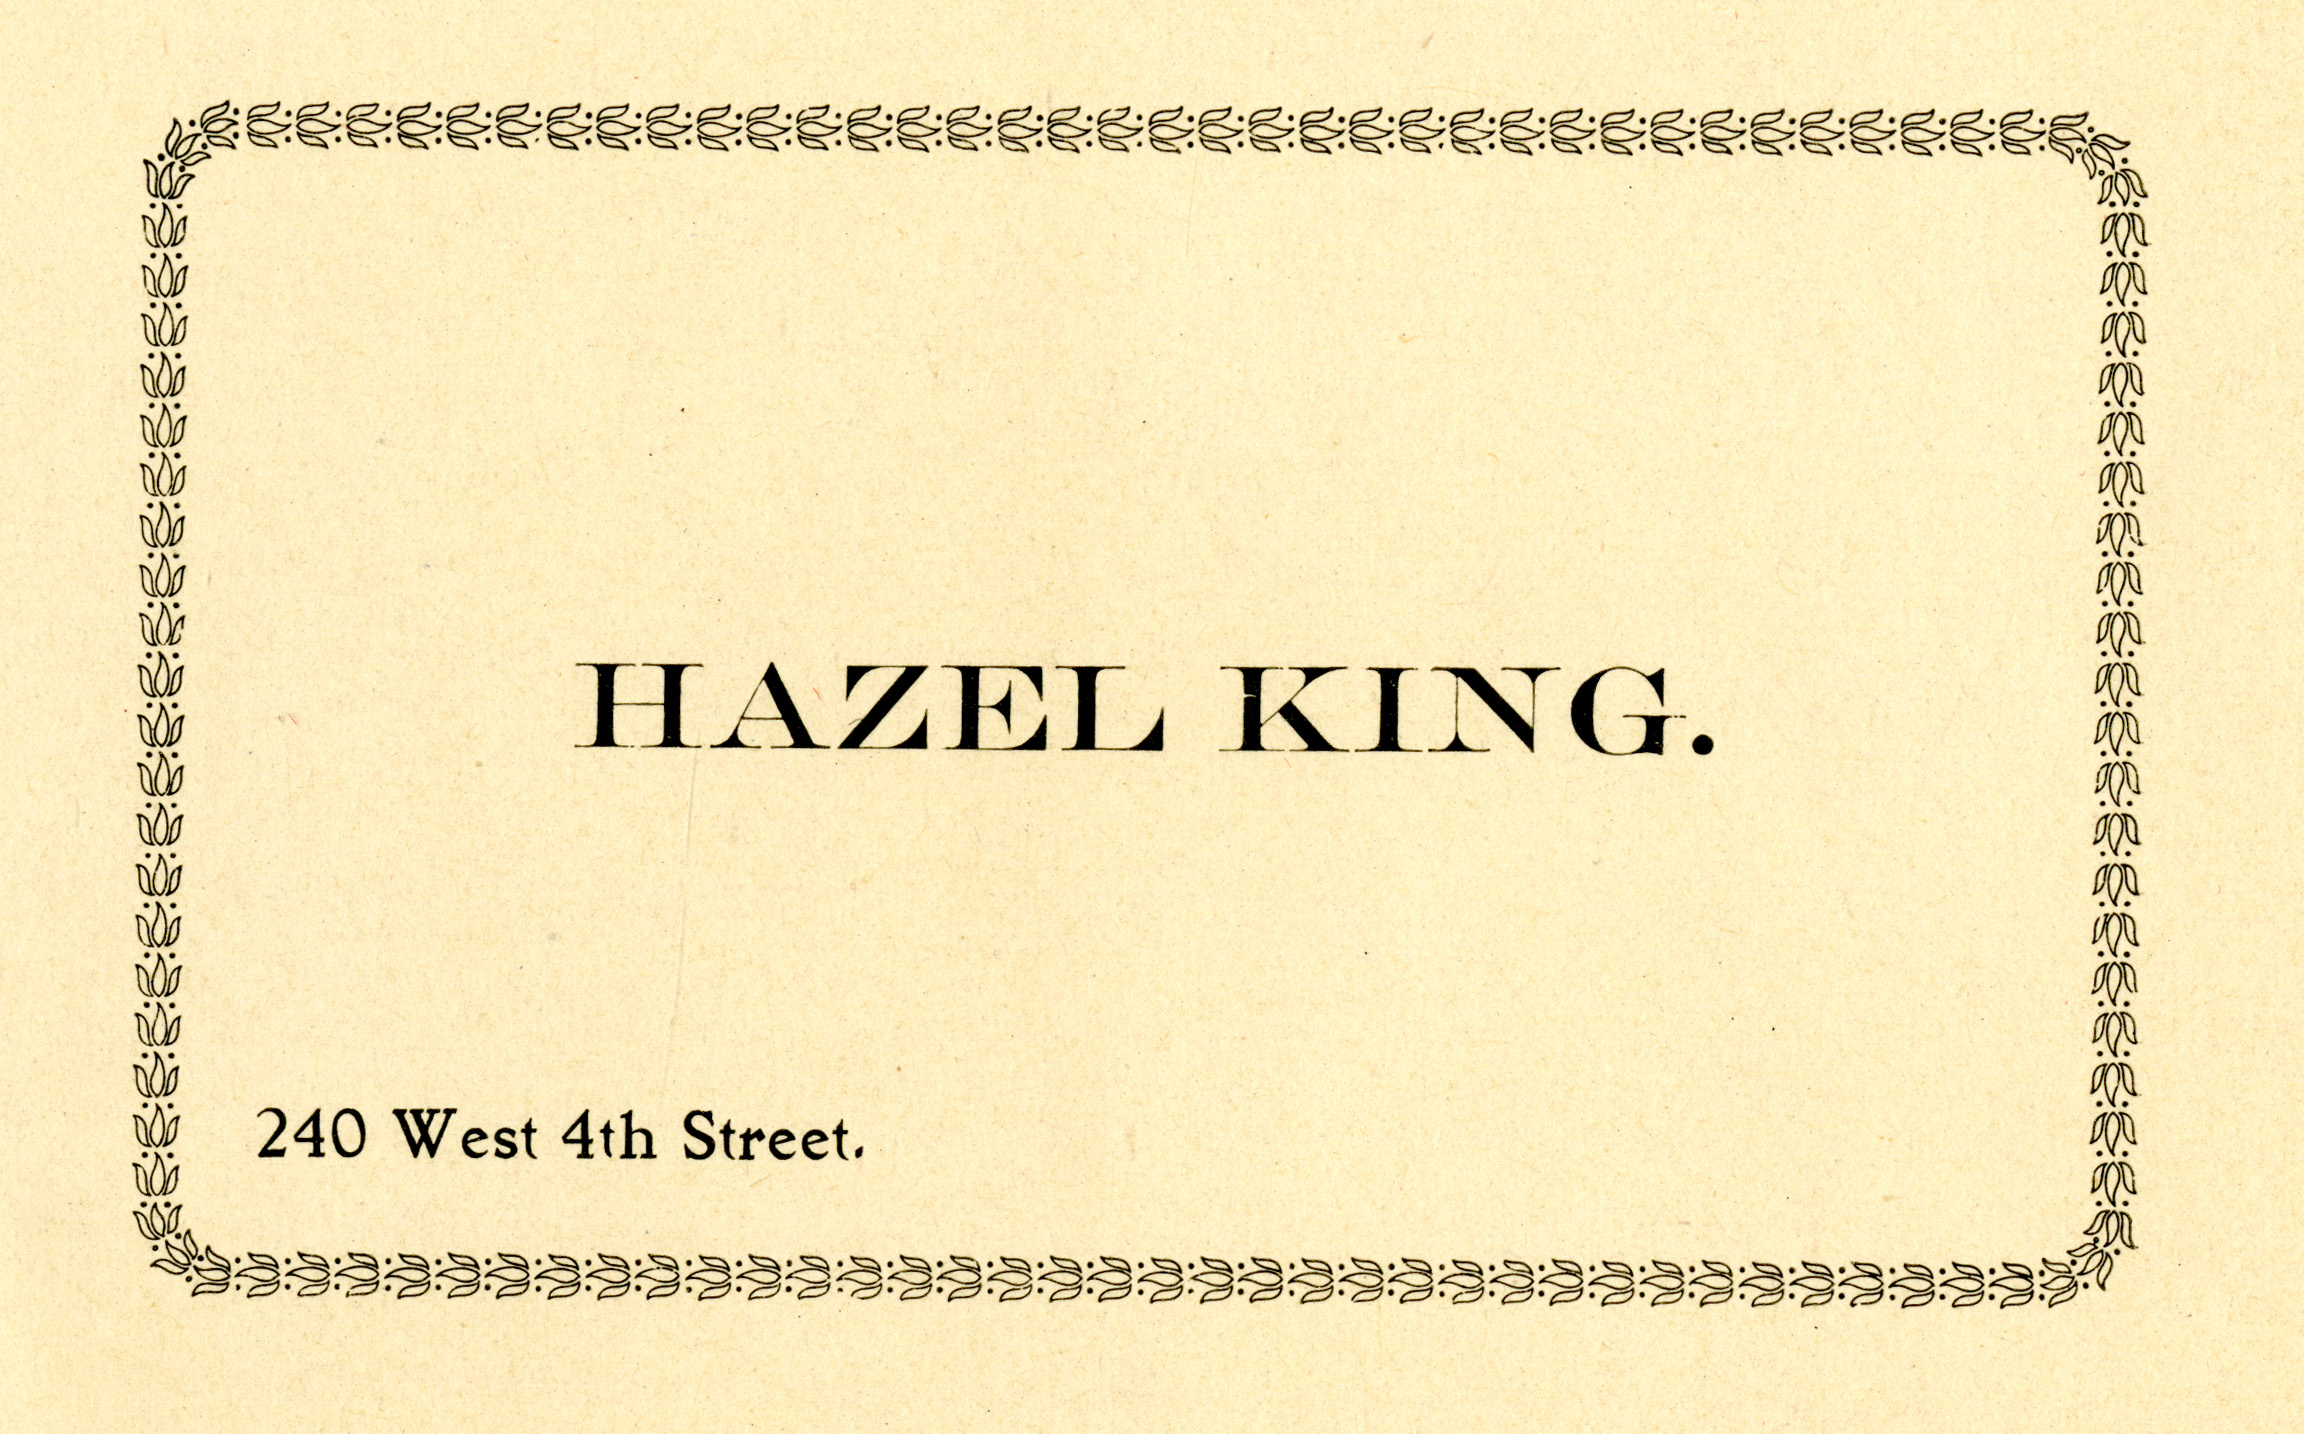 City Directory Address Card for Hazel King